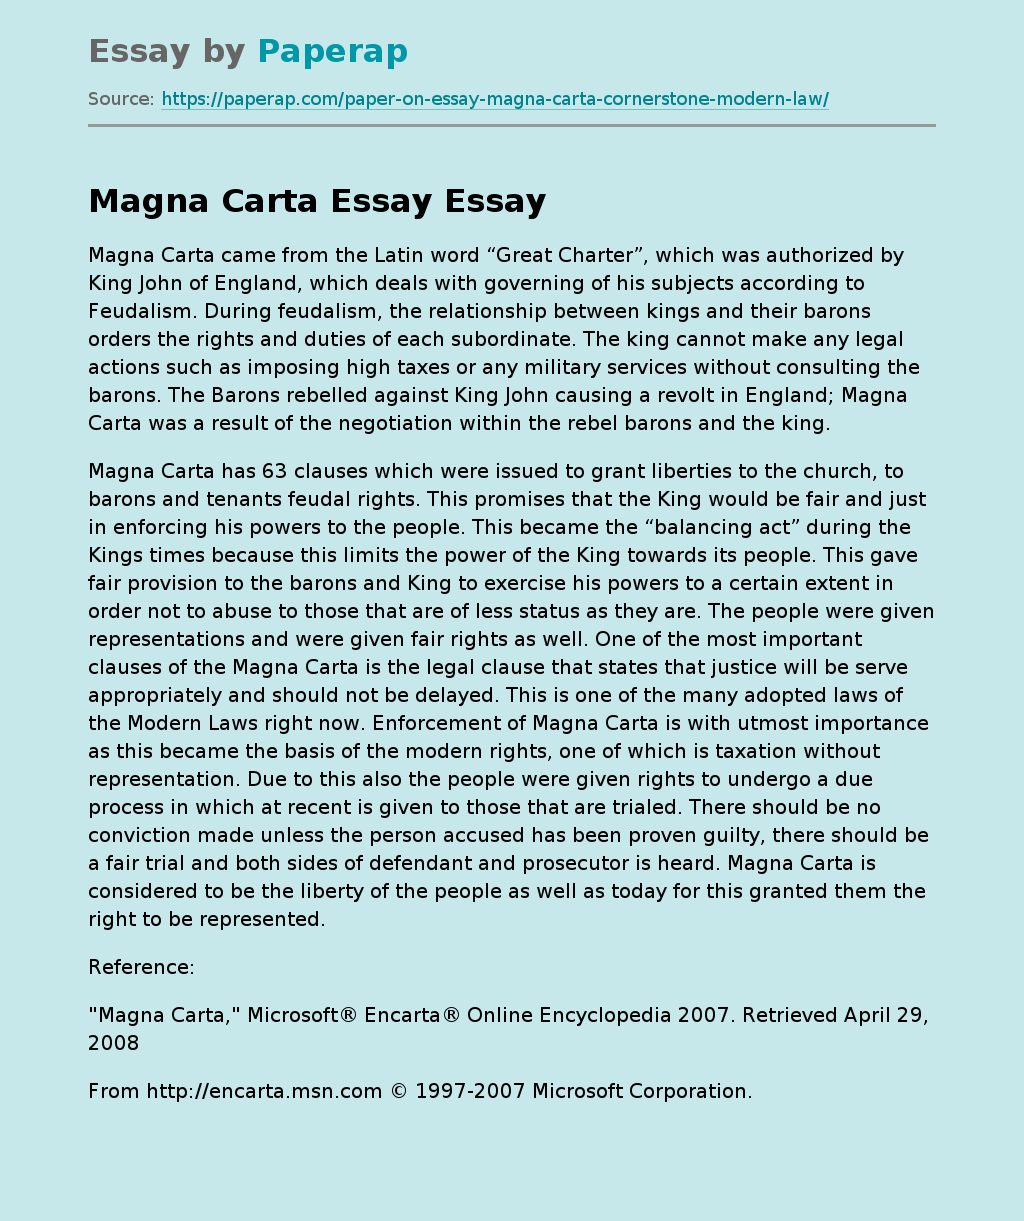 Magna Carta Essay